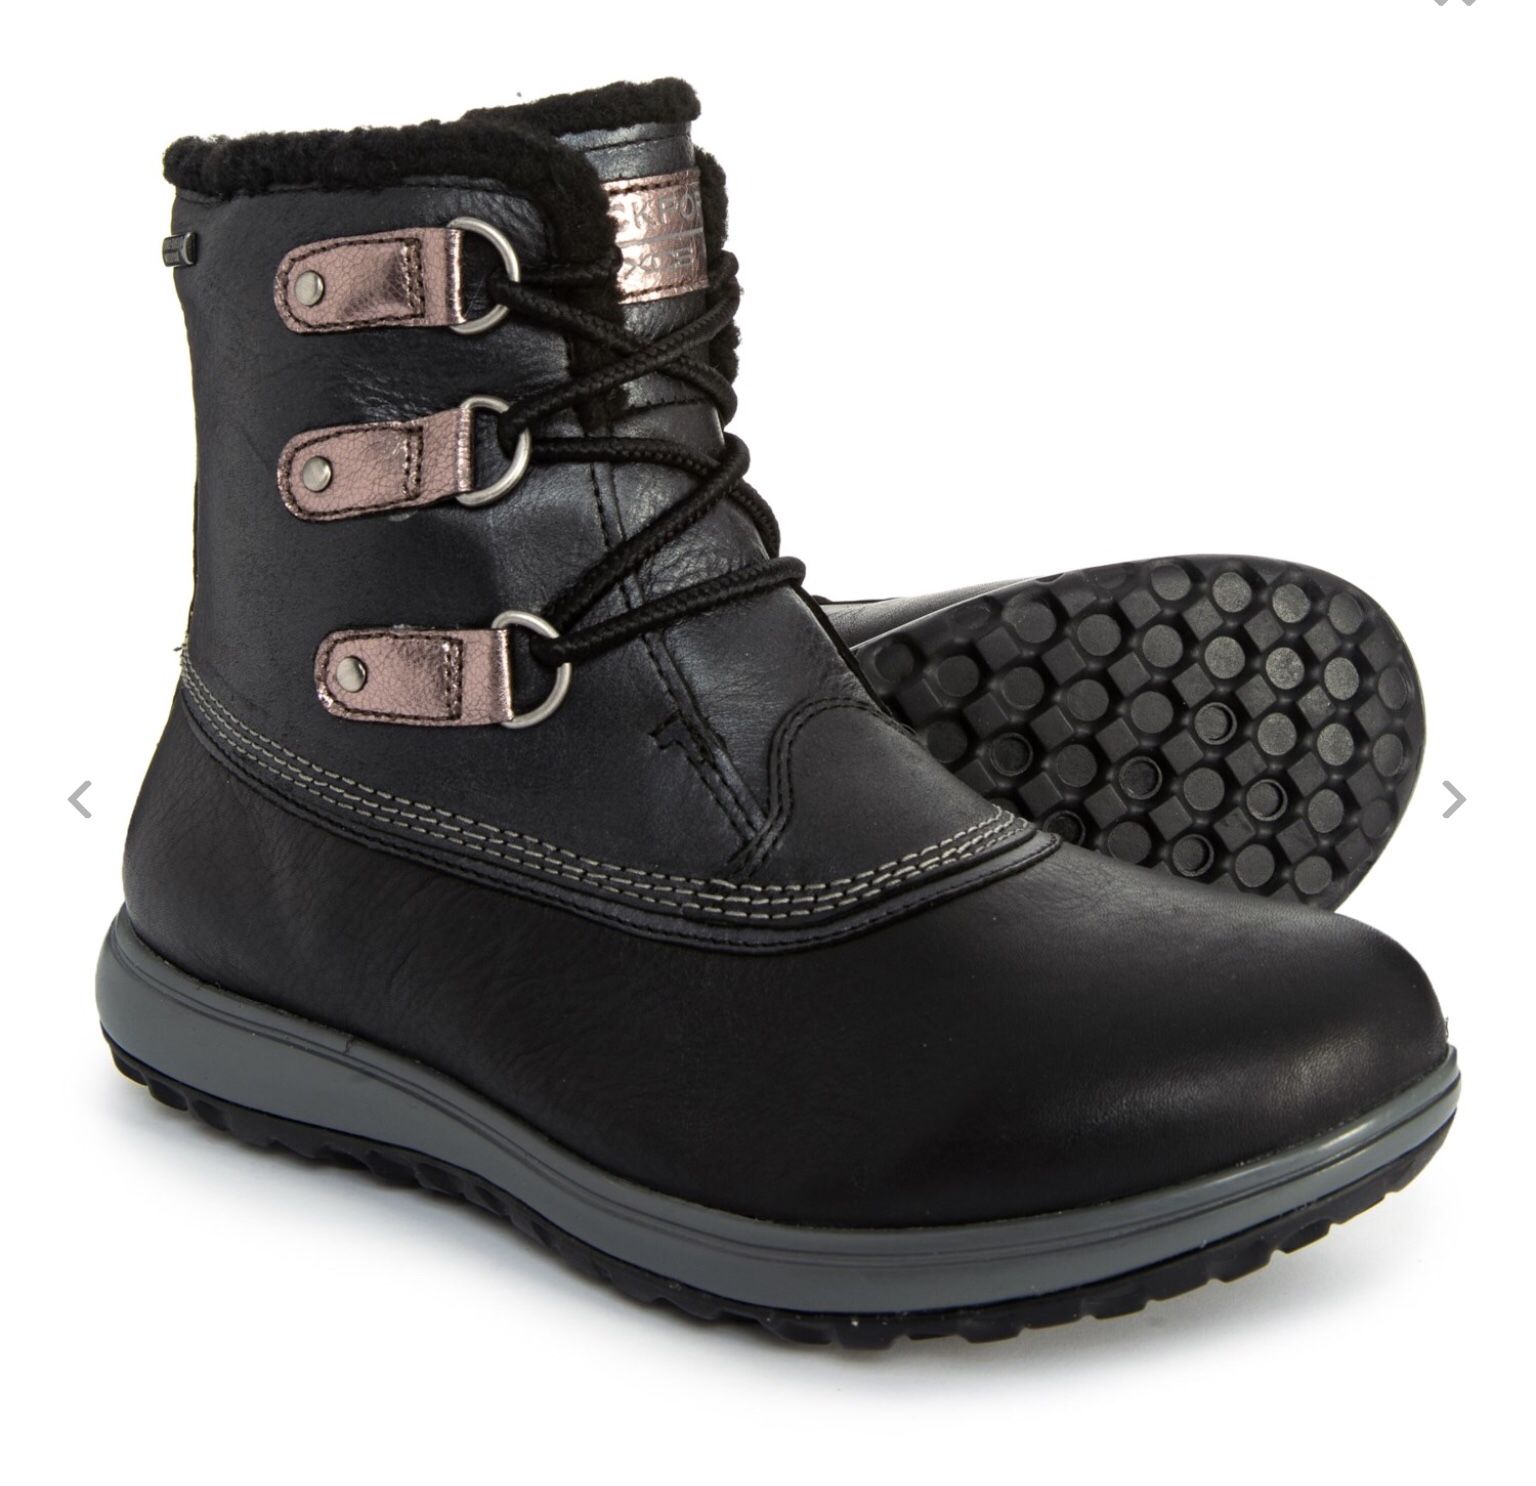 NEW!!! True leather Rockport XCS Britt Low Waterproof winter boot size 7